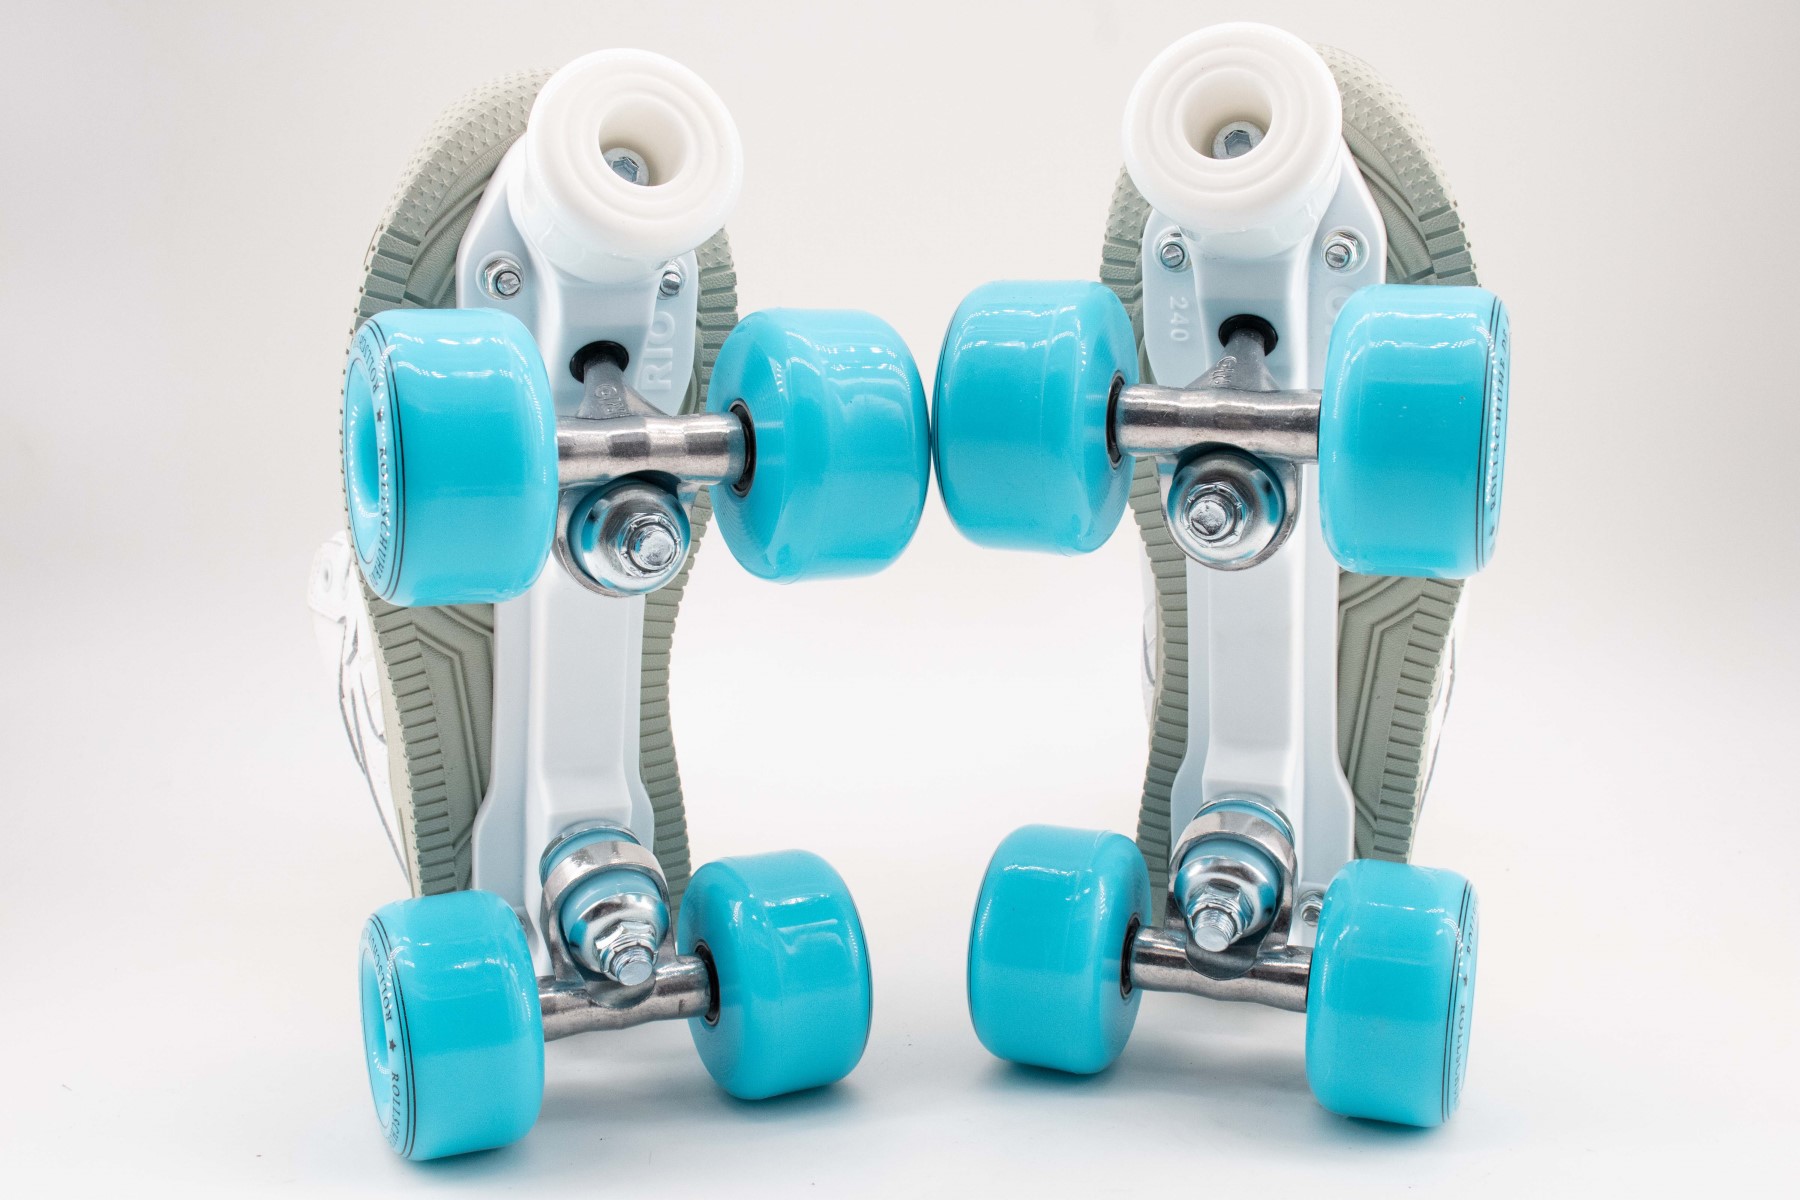 WSS Blue Line Roller Skates